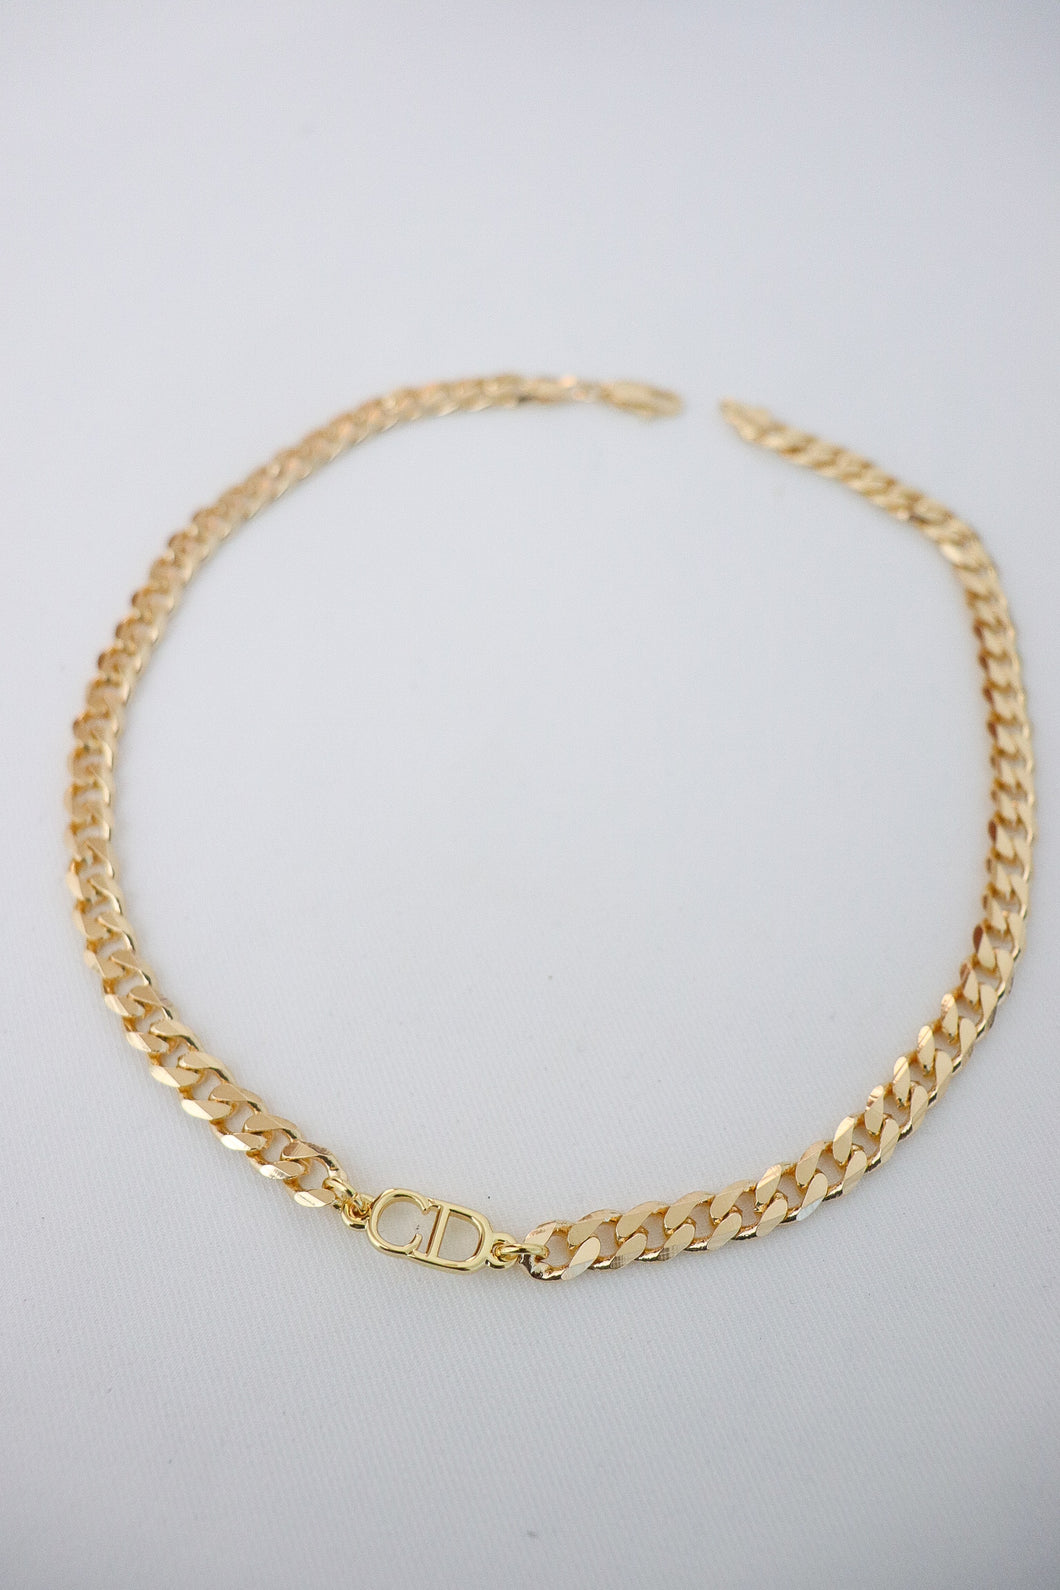 Dior choker -gold filled chain